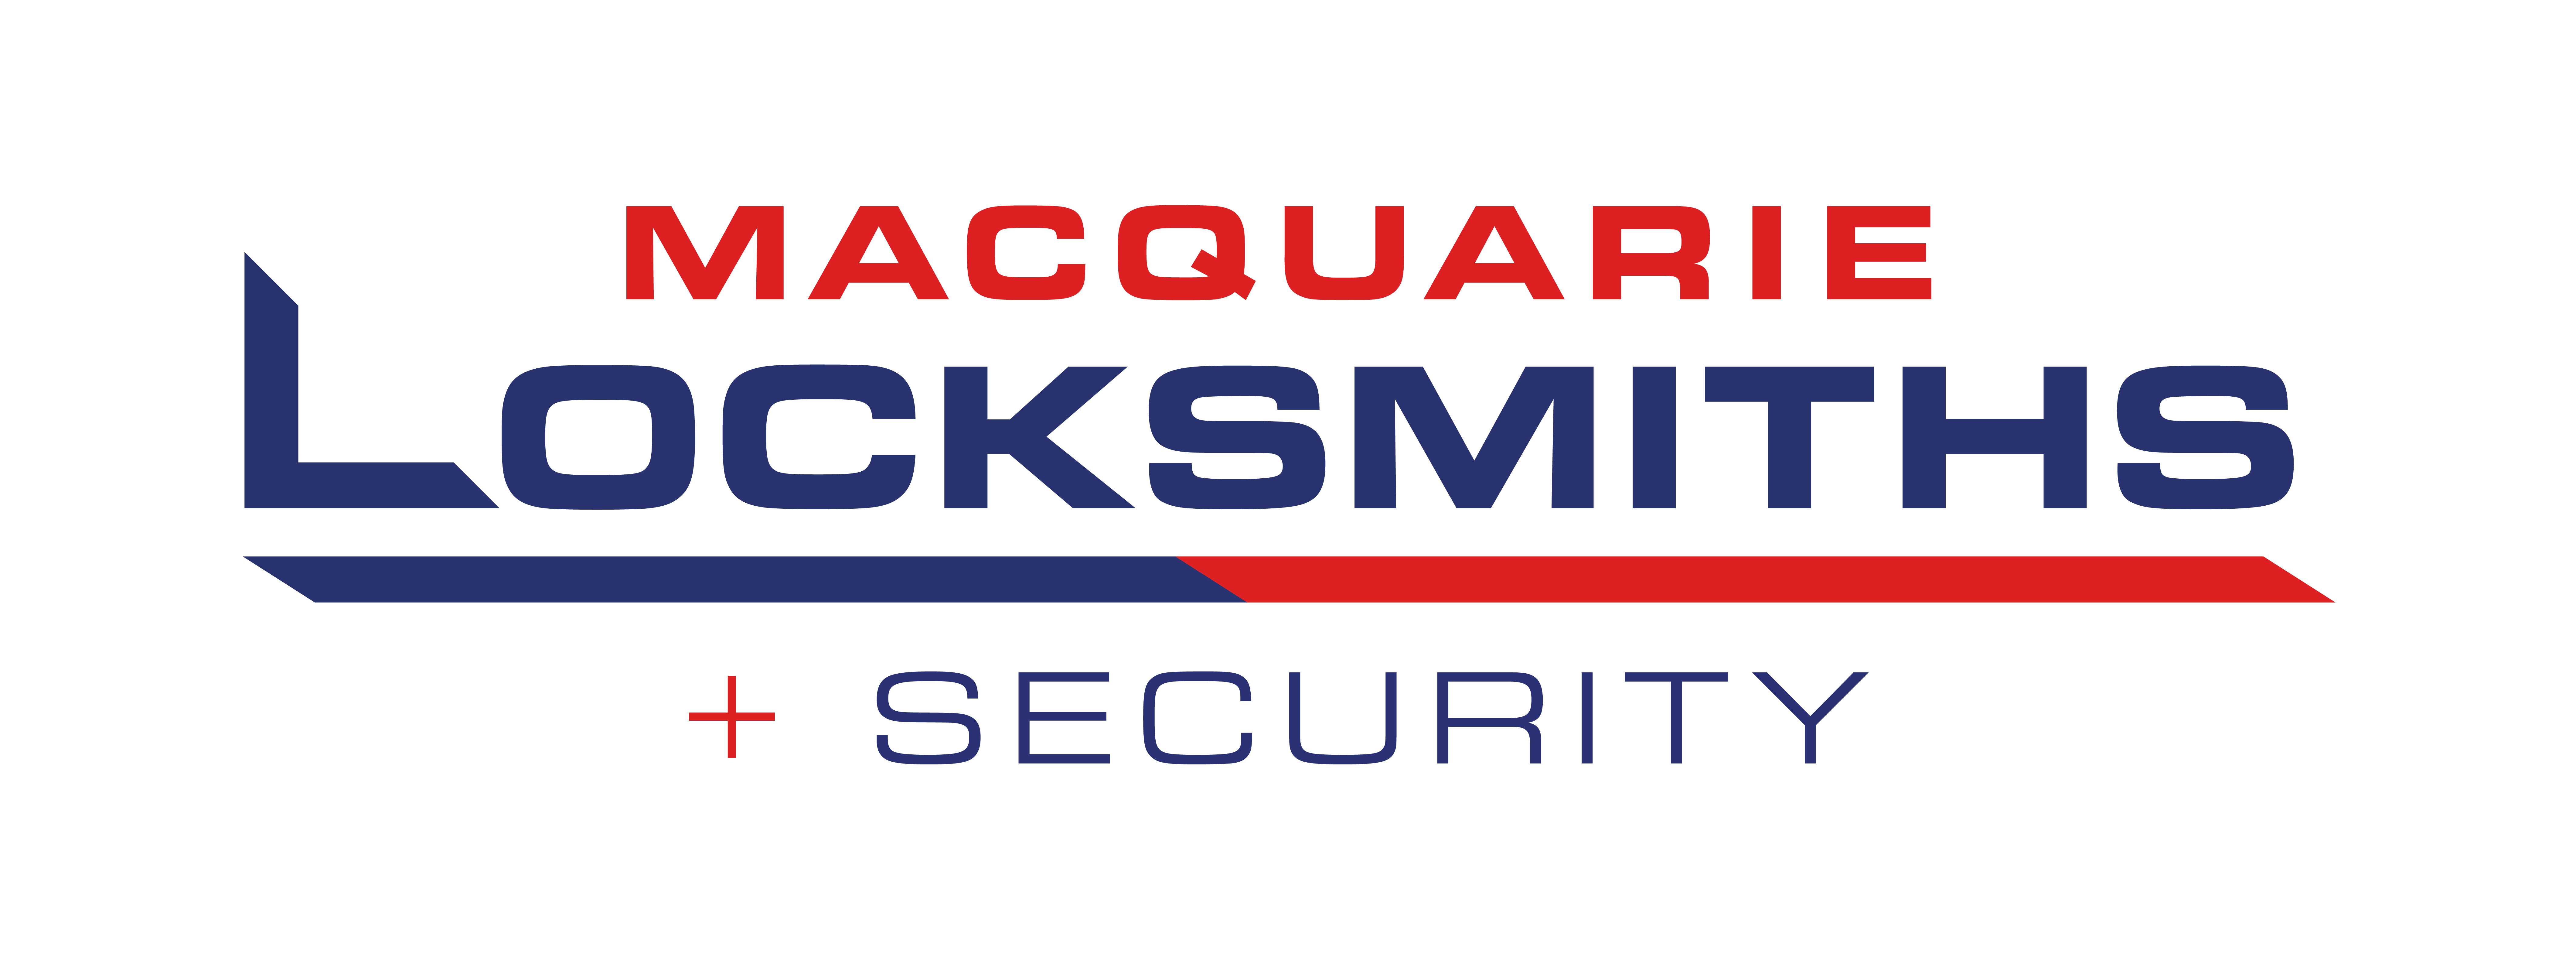 Macquarie Locksmith and Security Logo